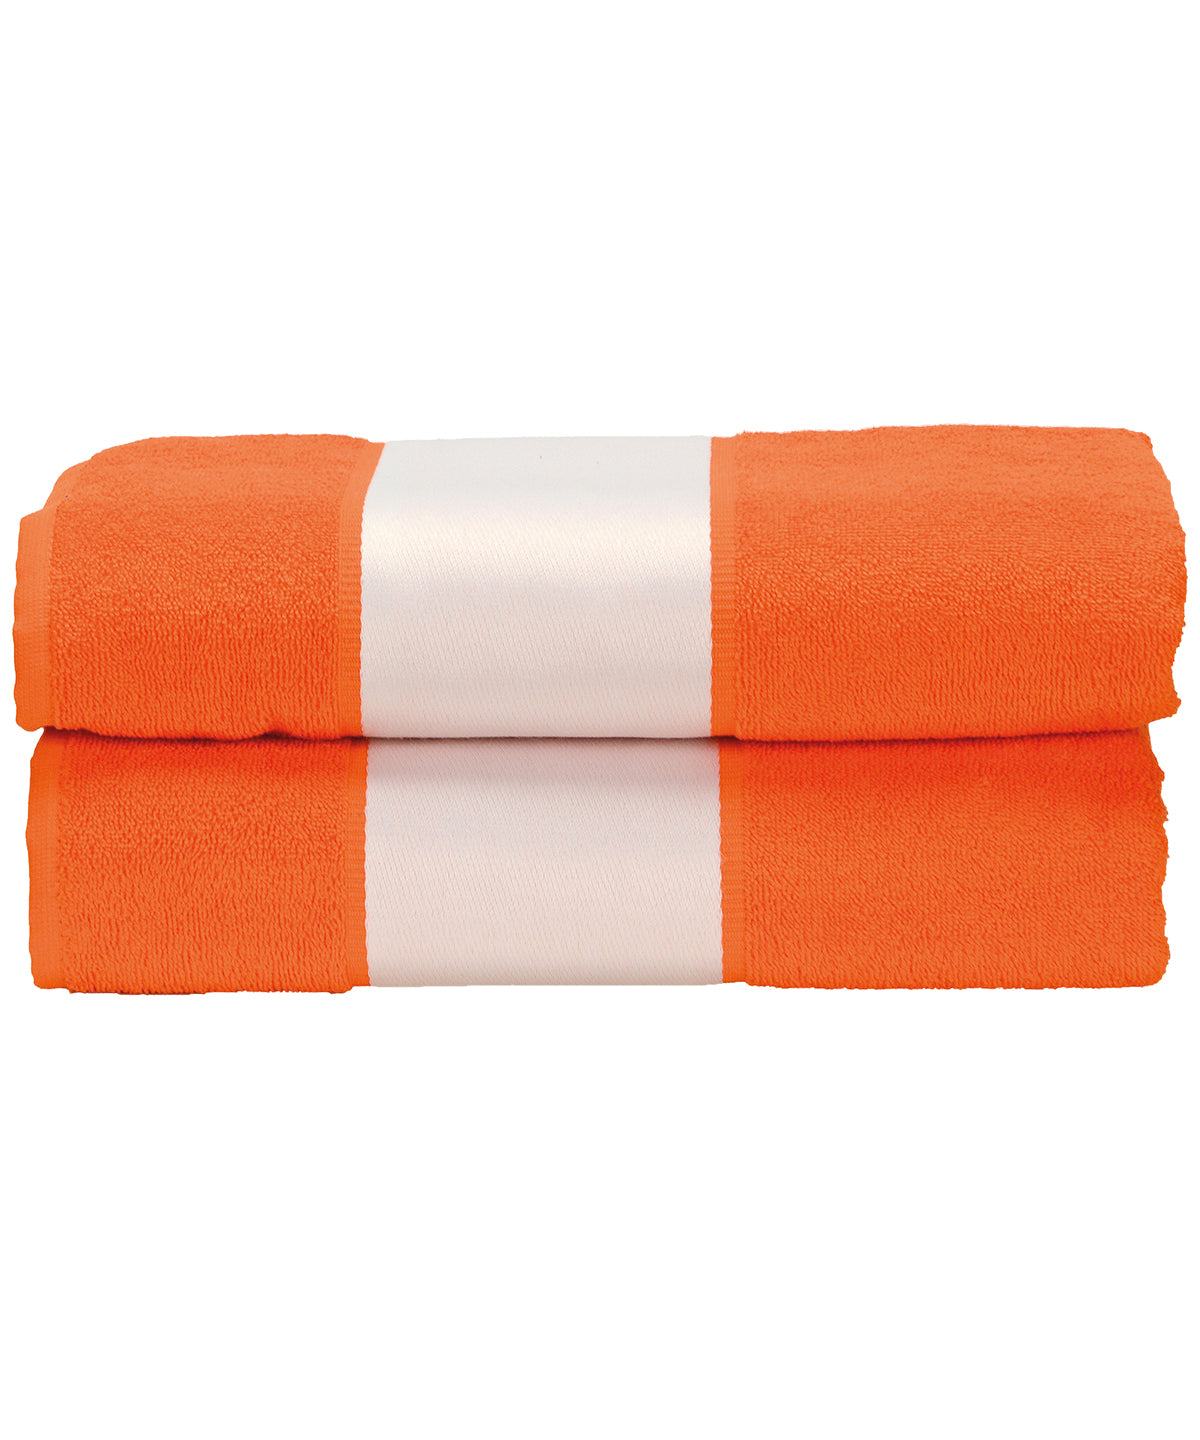 Personalised Towels - Mid Orange A&R Towels ARTG® SUBLI-Me® bath towel